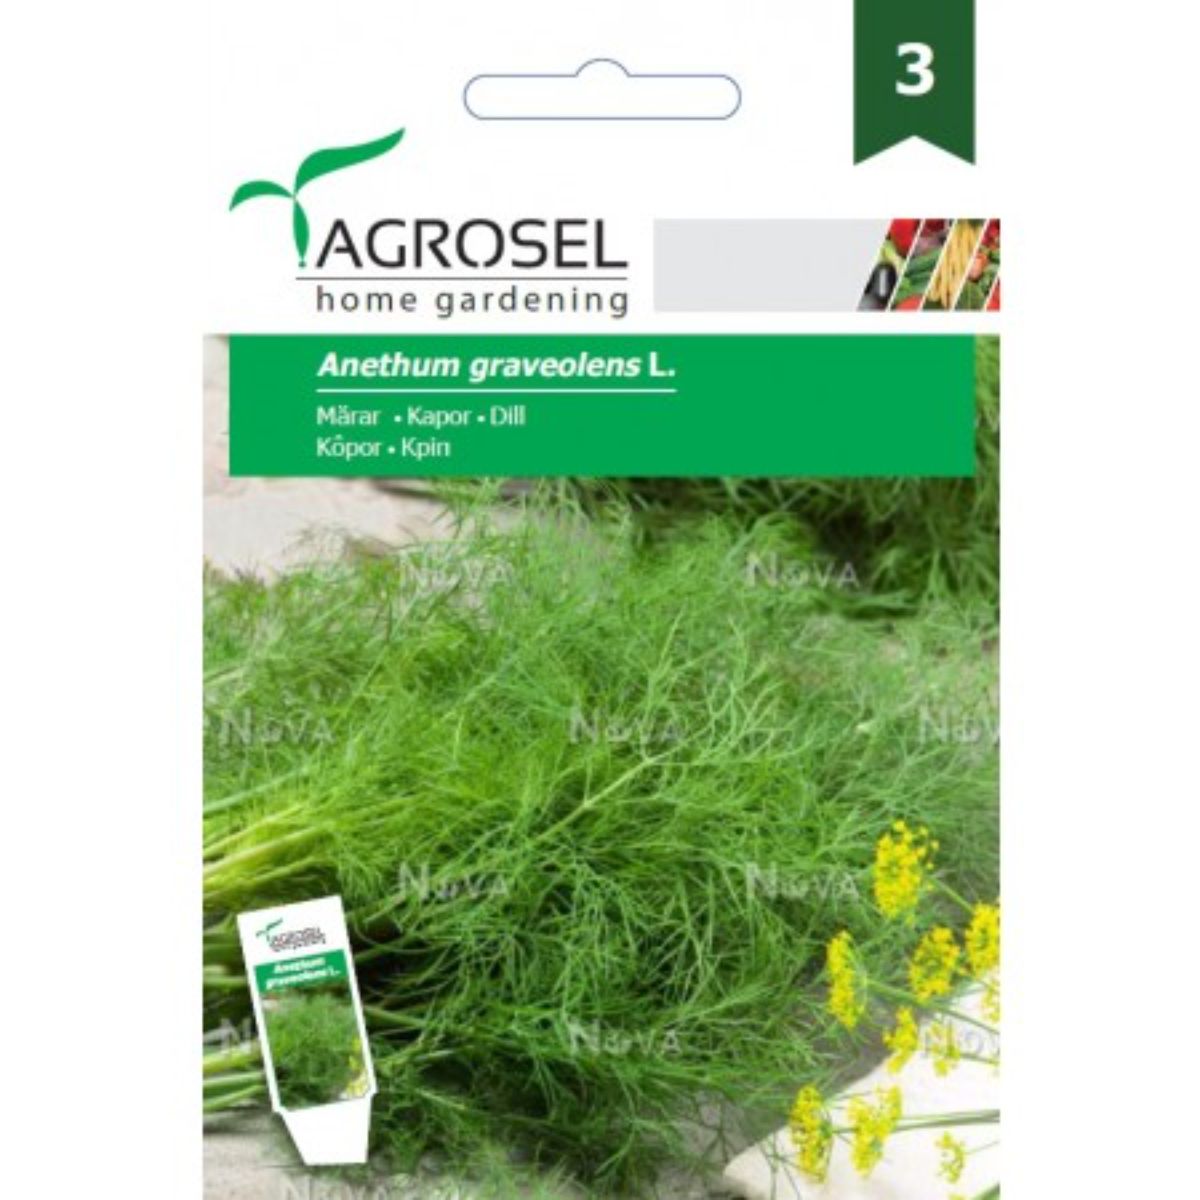 Seminte plante aromatice - Seminte aromatice Marar Agromar Agrosel 5 g, hectarul.ro